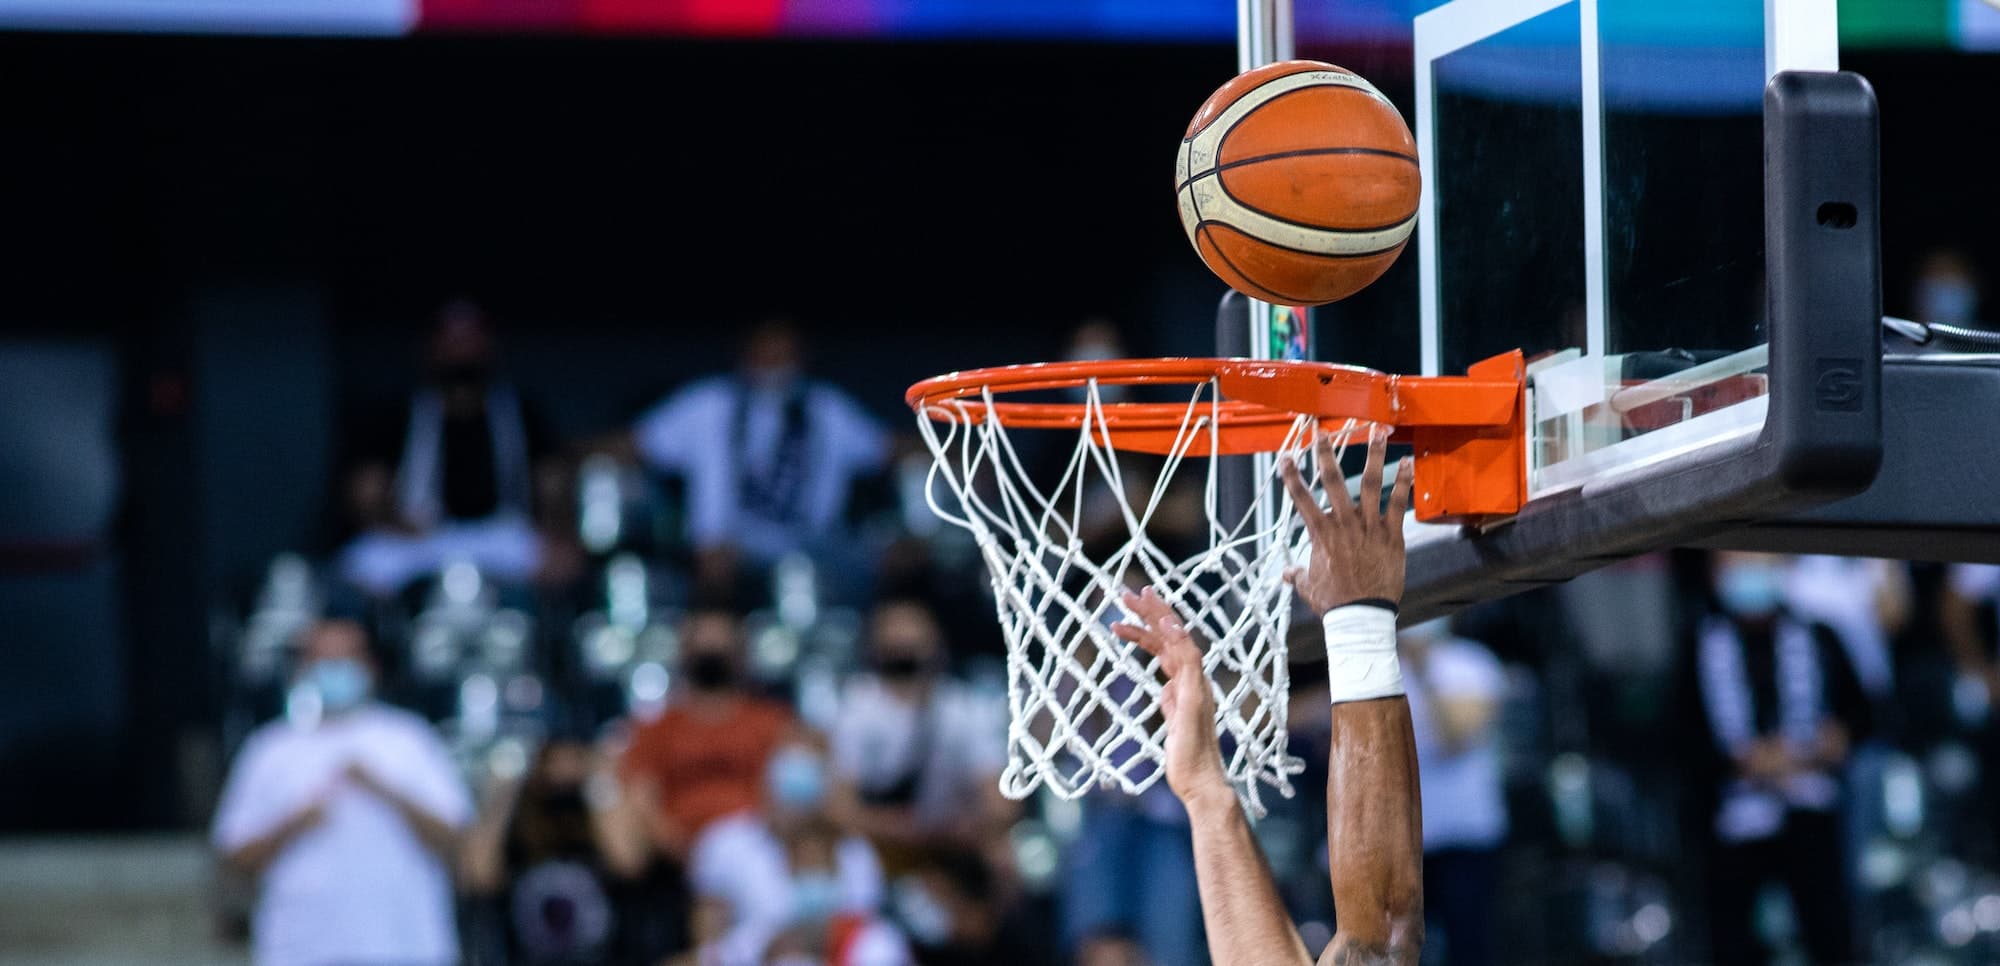 basketball going through hoop during game_métiers bien payés sans diplômes